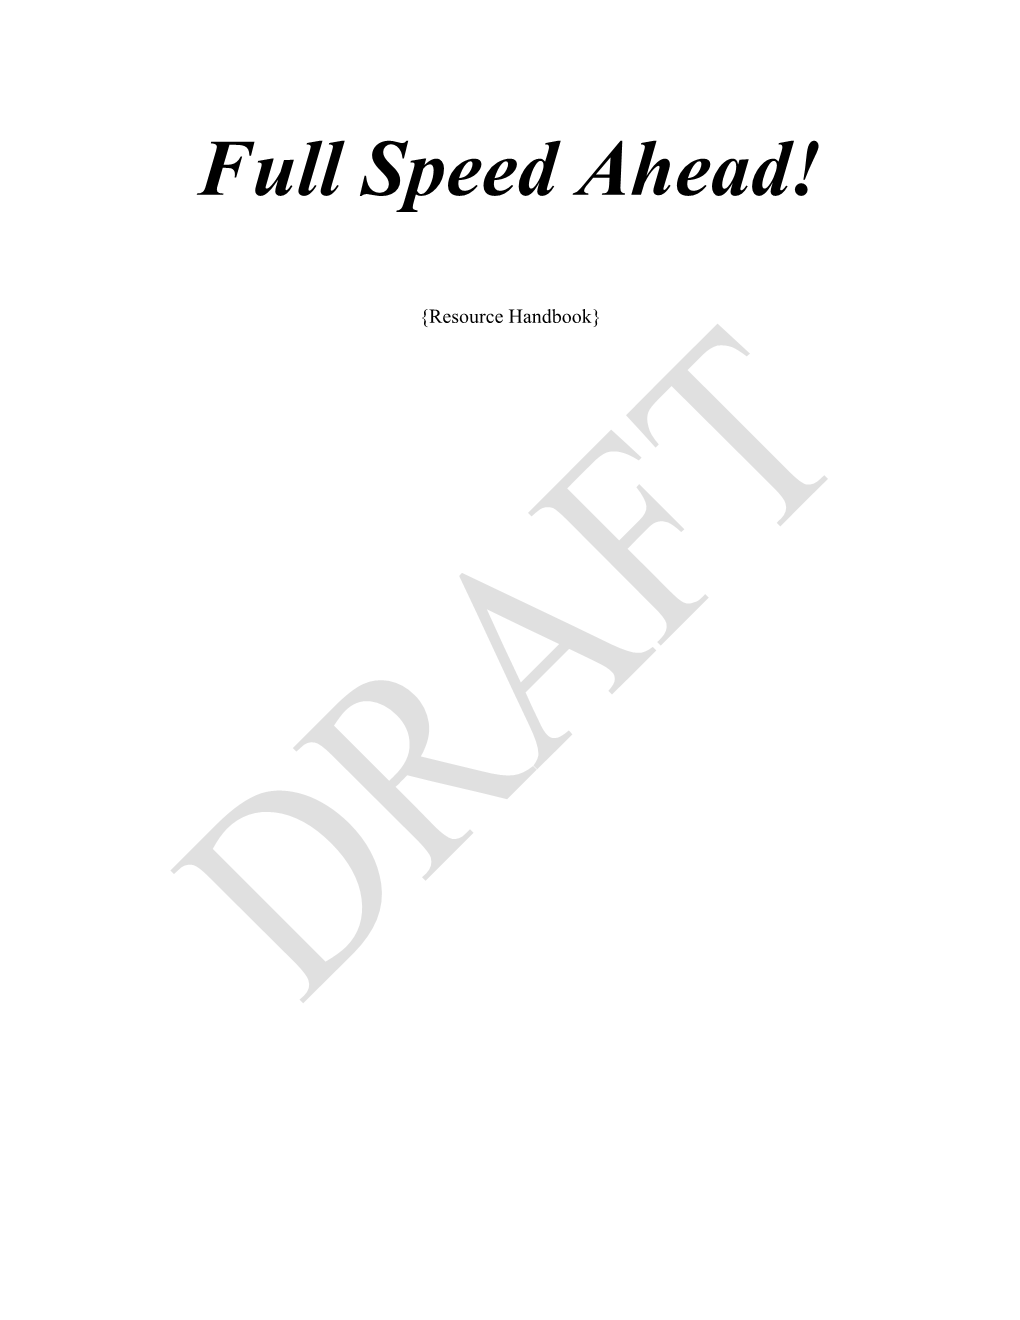 Full Speed Ahead Program Resource Handbook